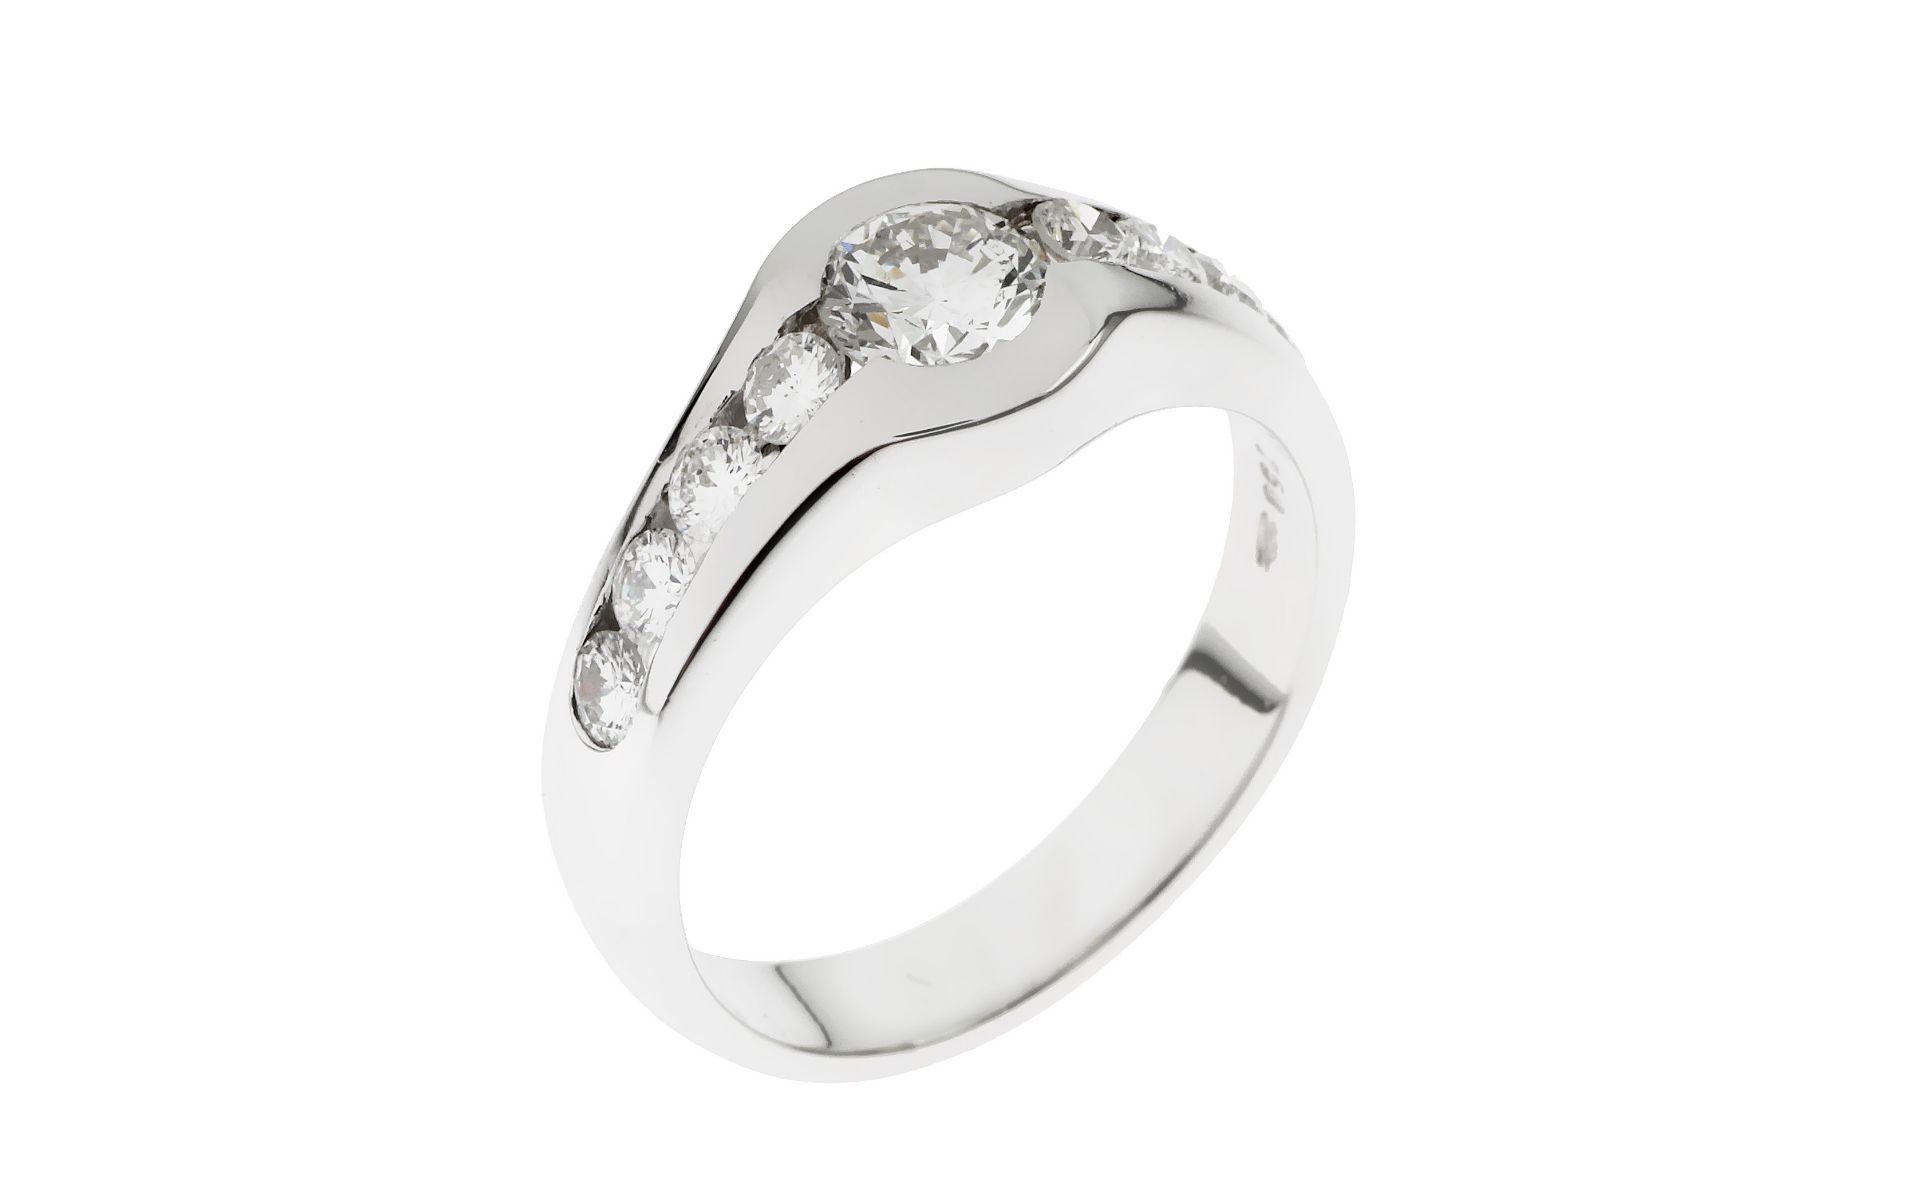 Ring 6.15 g 750/- Weissgold mit Diamanten. 1 Diamant ca. 0.50 ct. TTL/si. 8 Diamanten zus. ca. 0.40